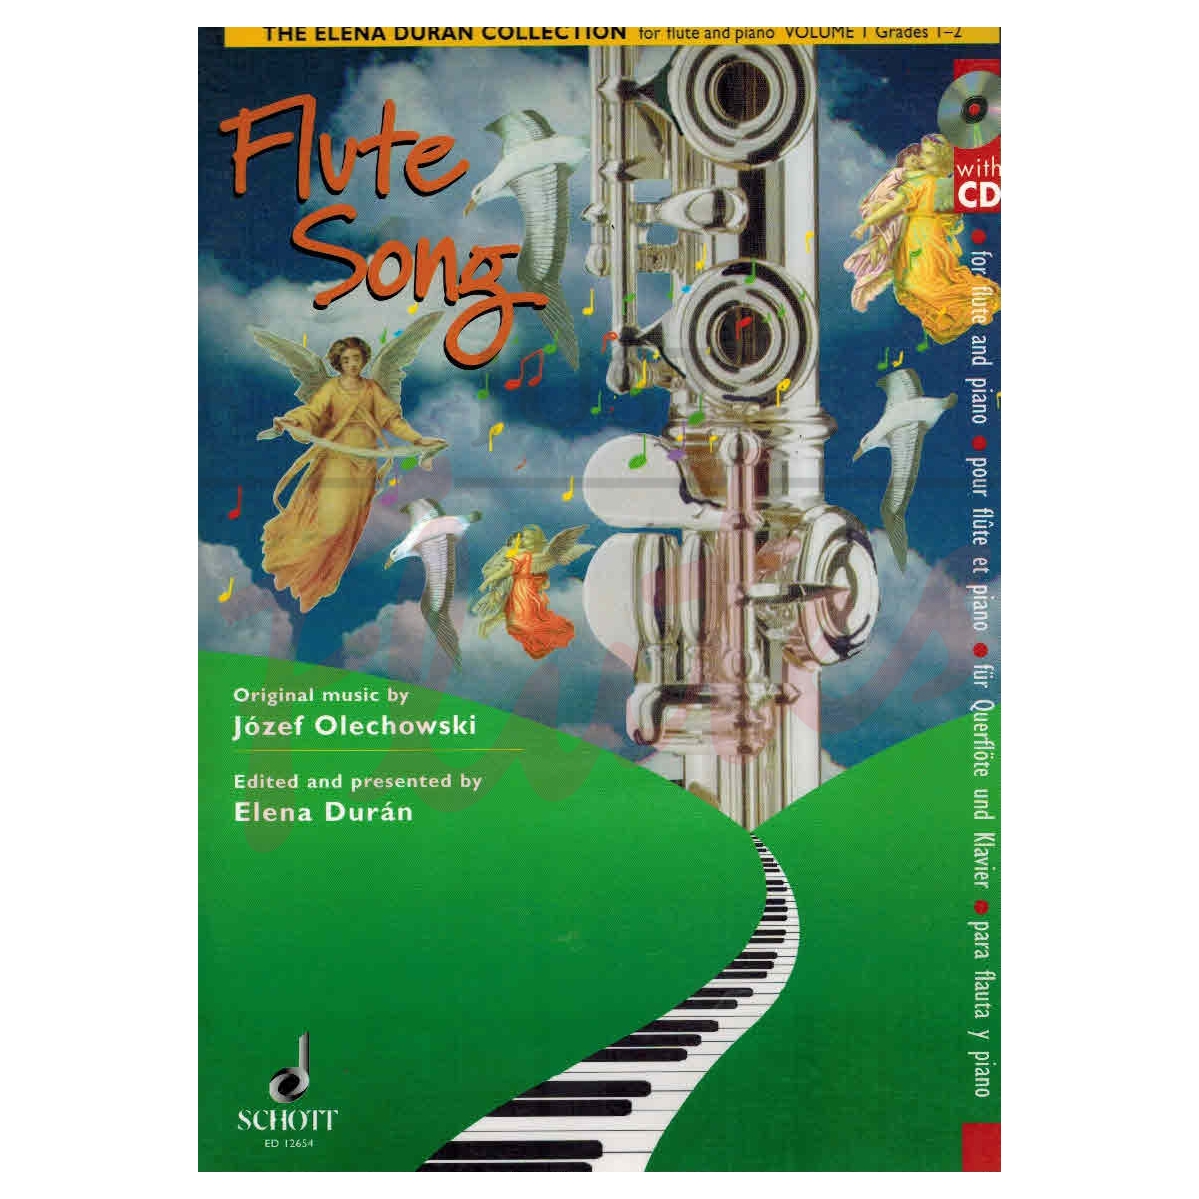 The Elena Duran Collection: Flute Song